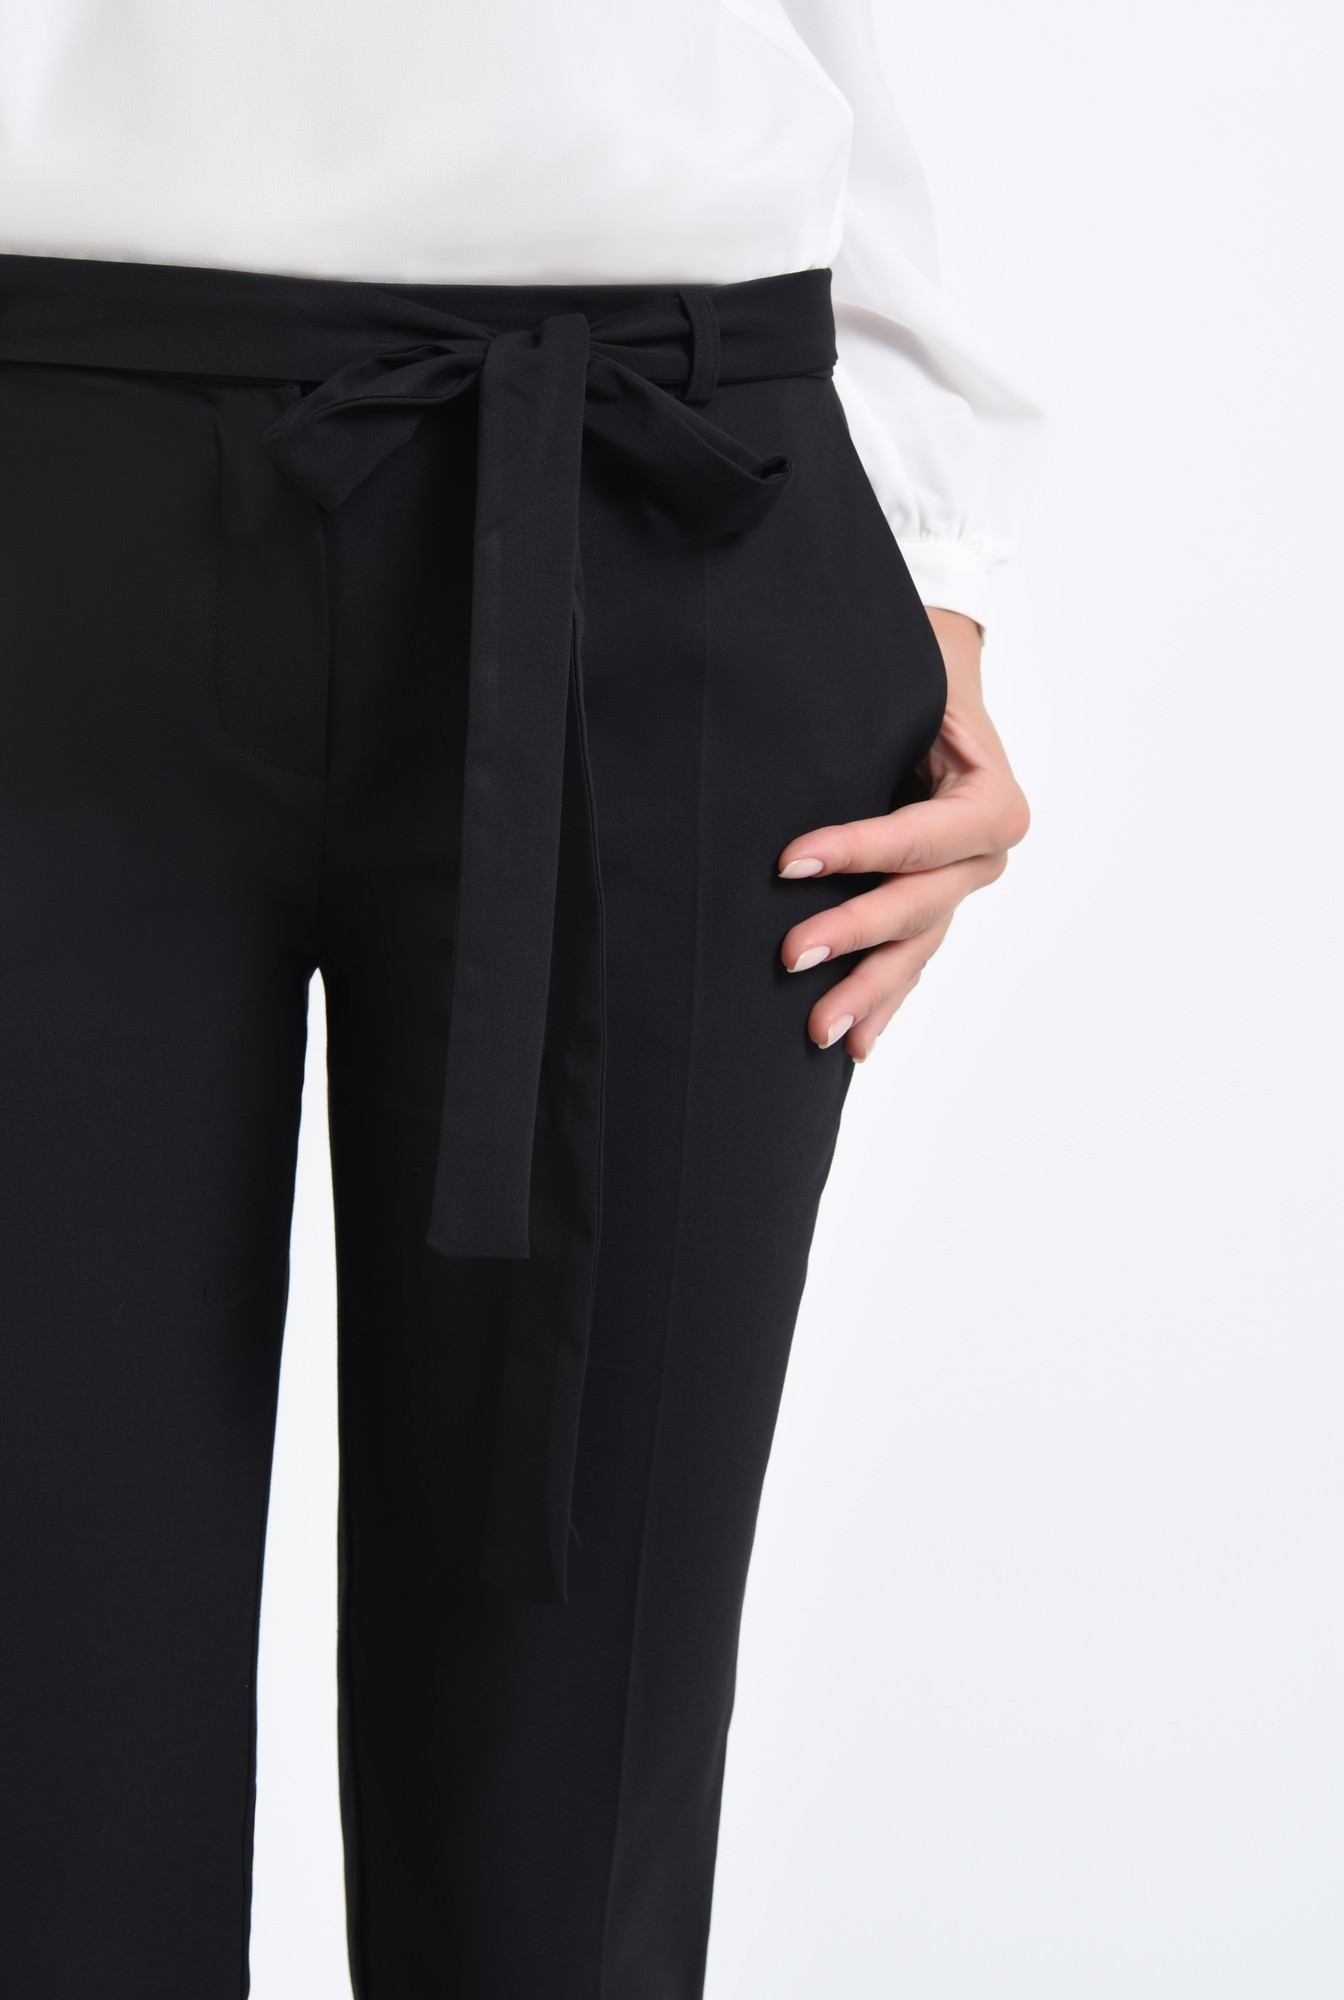 2 - pantaloni casual, negru, buzunare, cordon